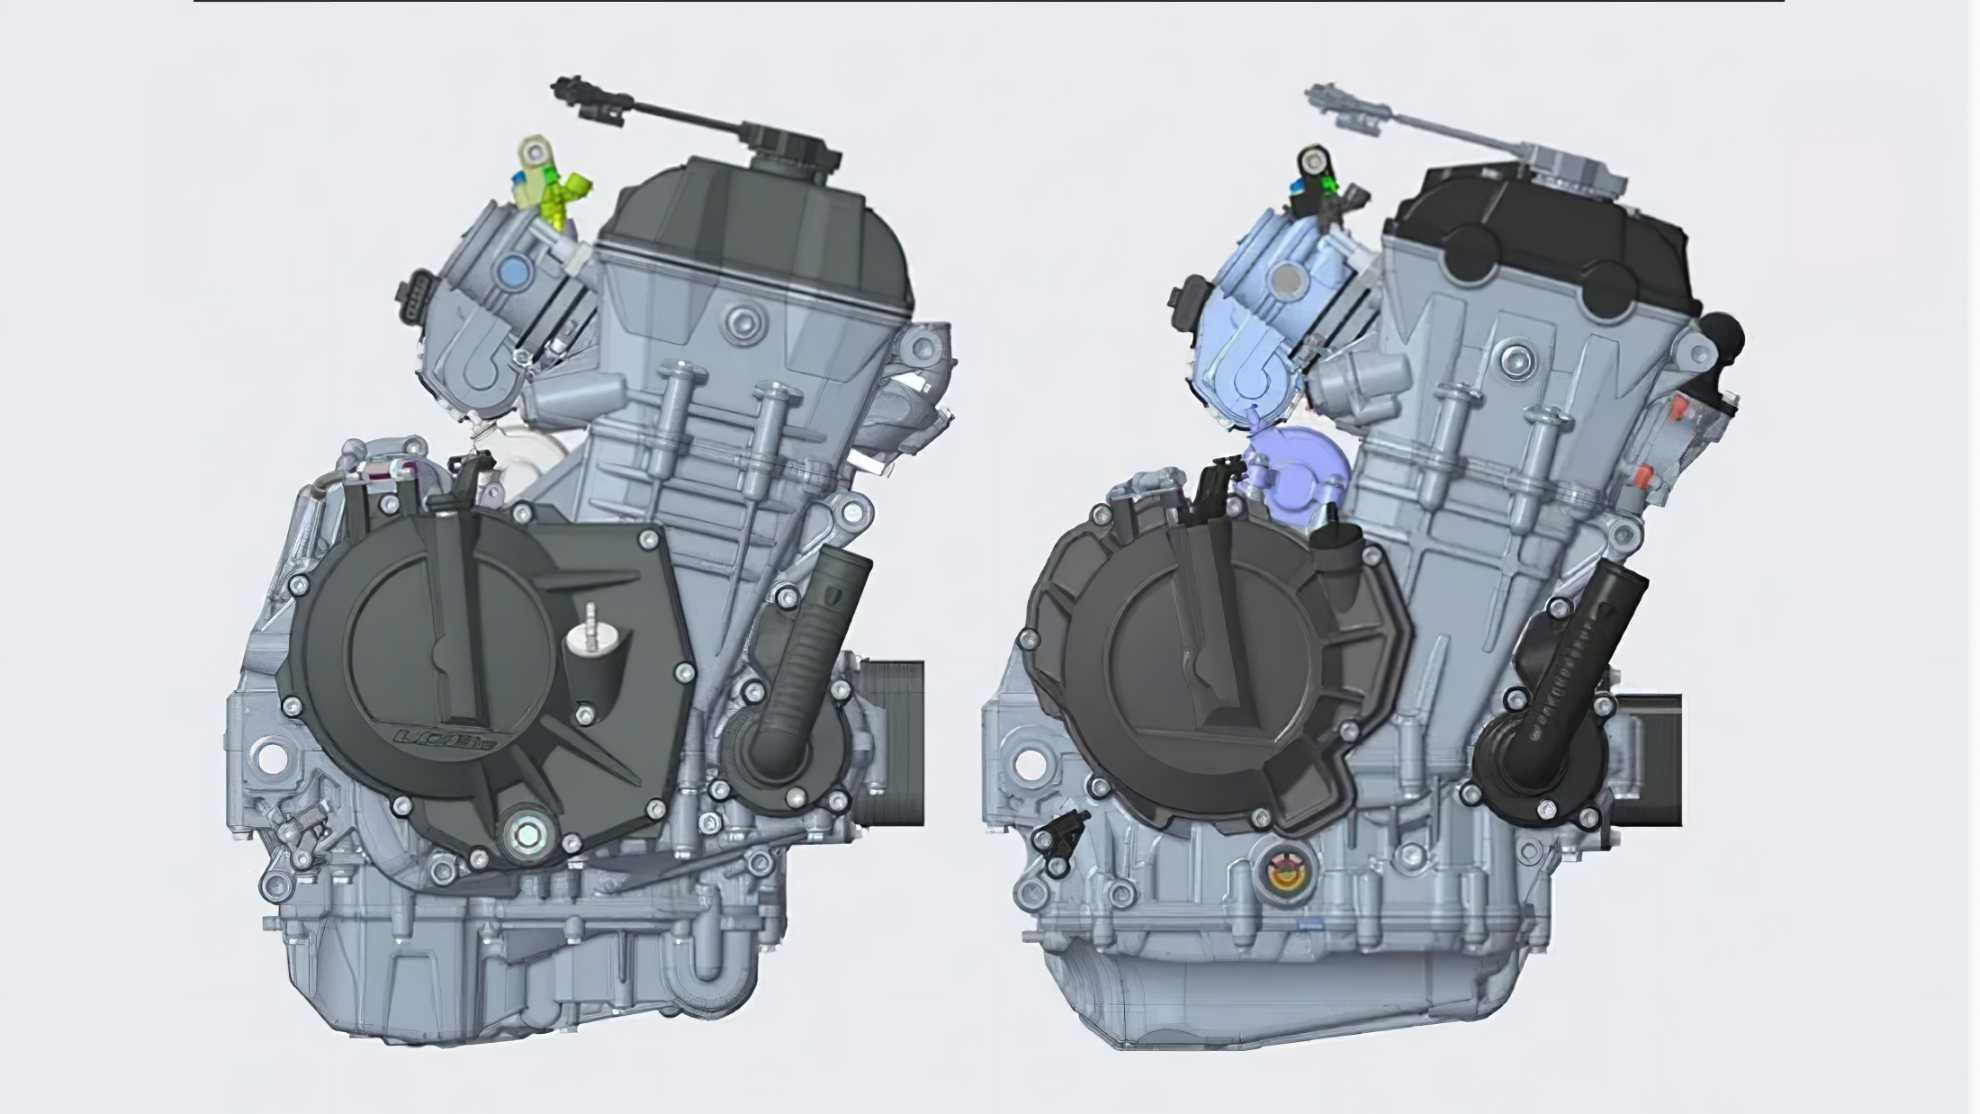 KTM’s new 990cc twin cylinder